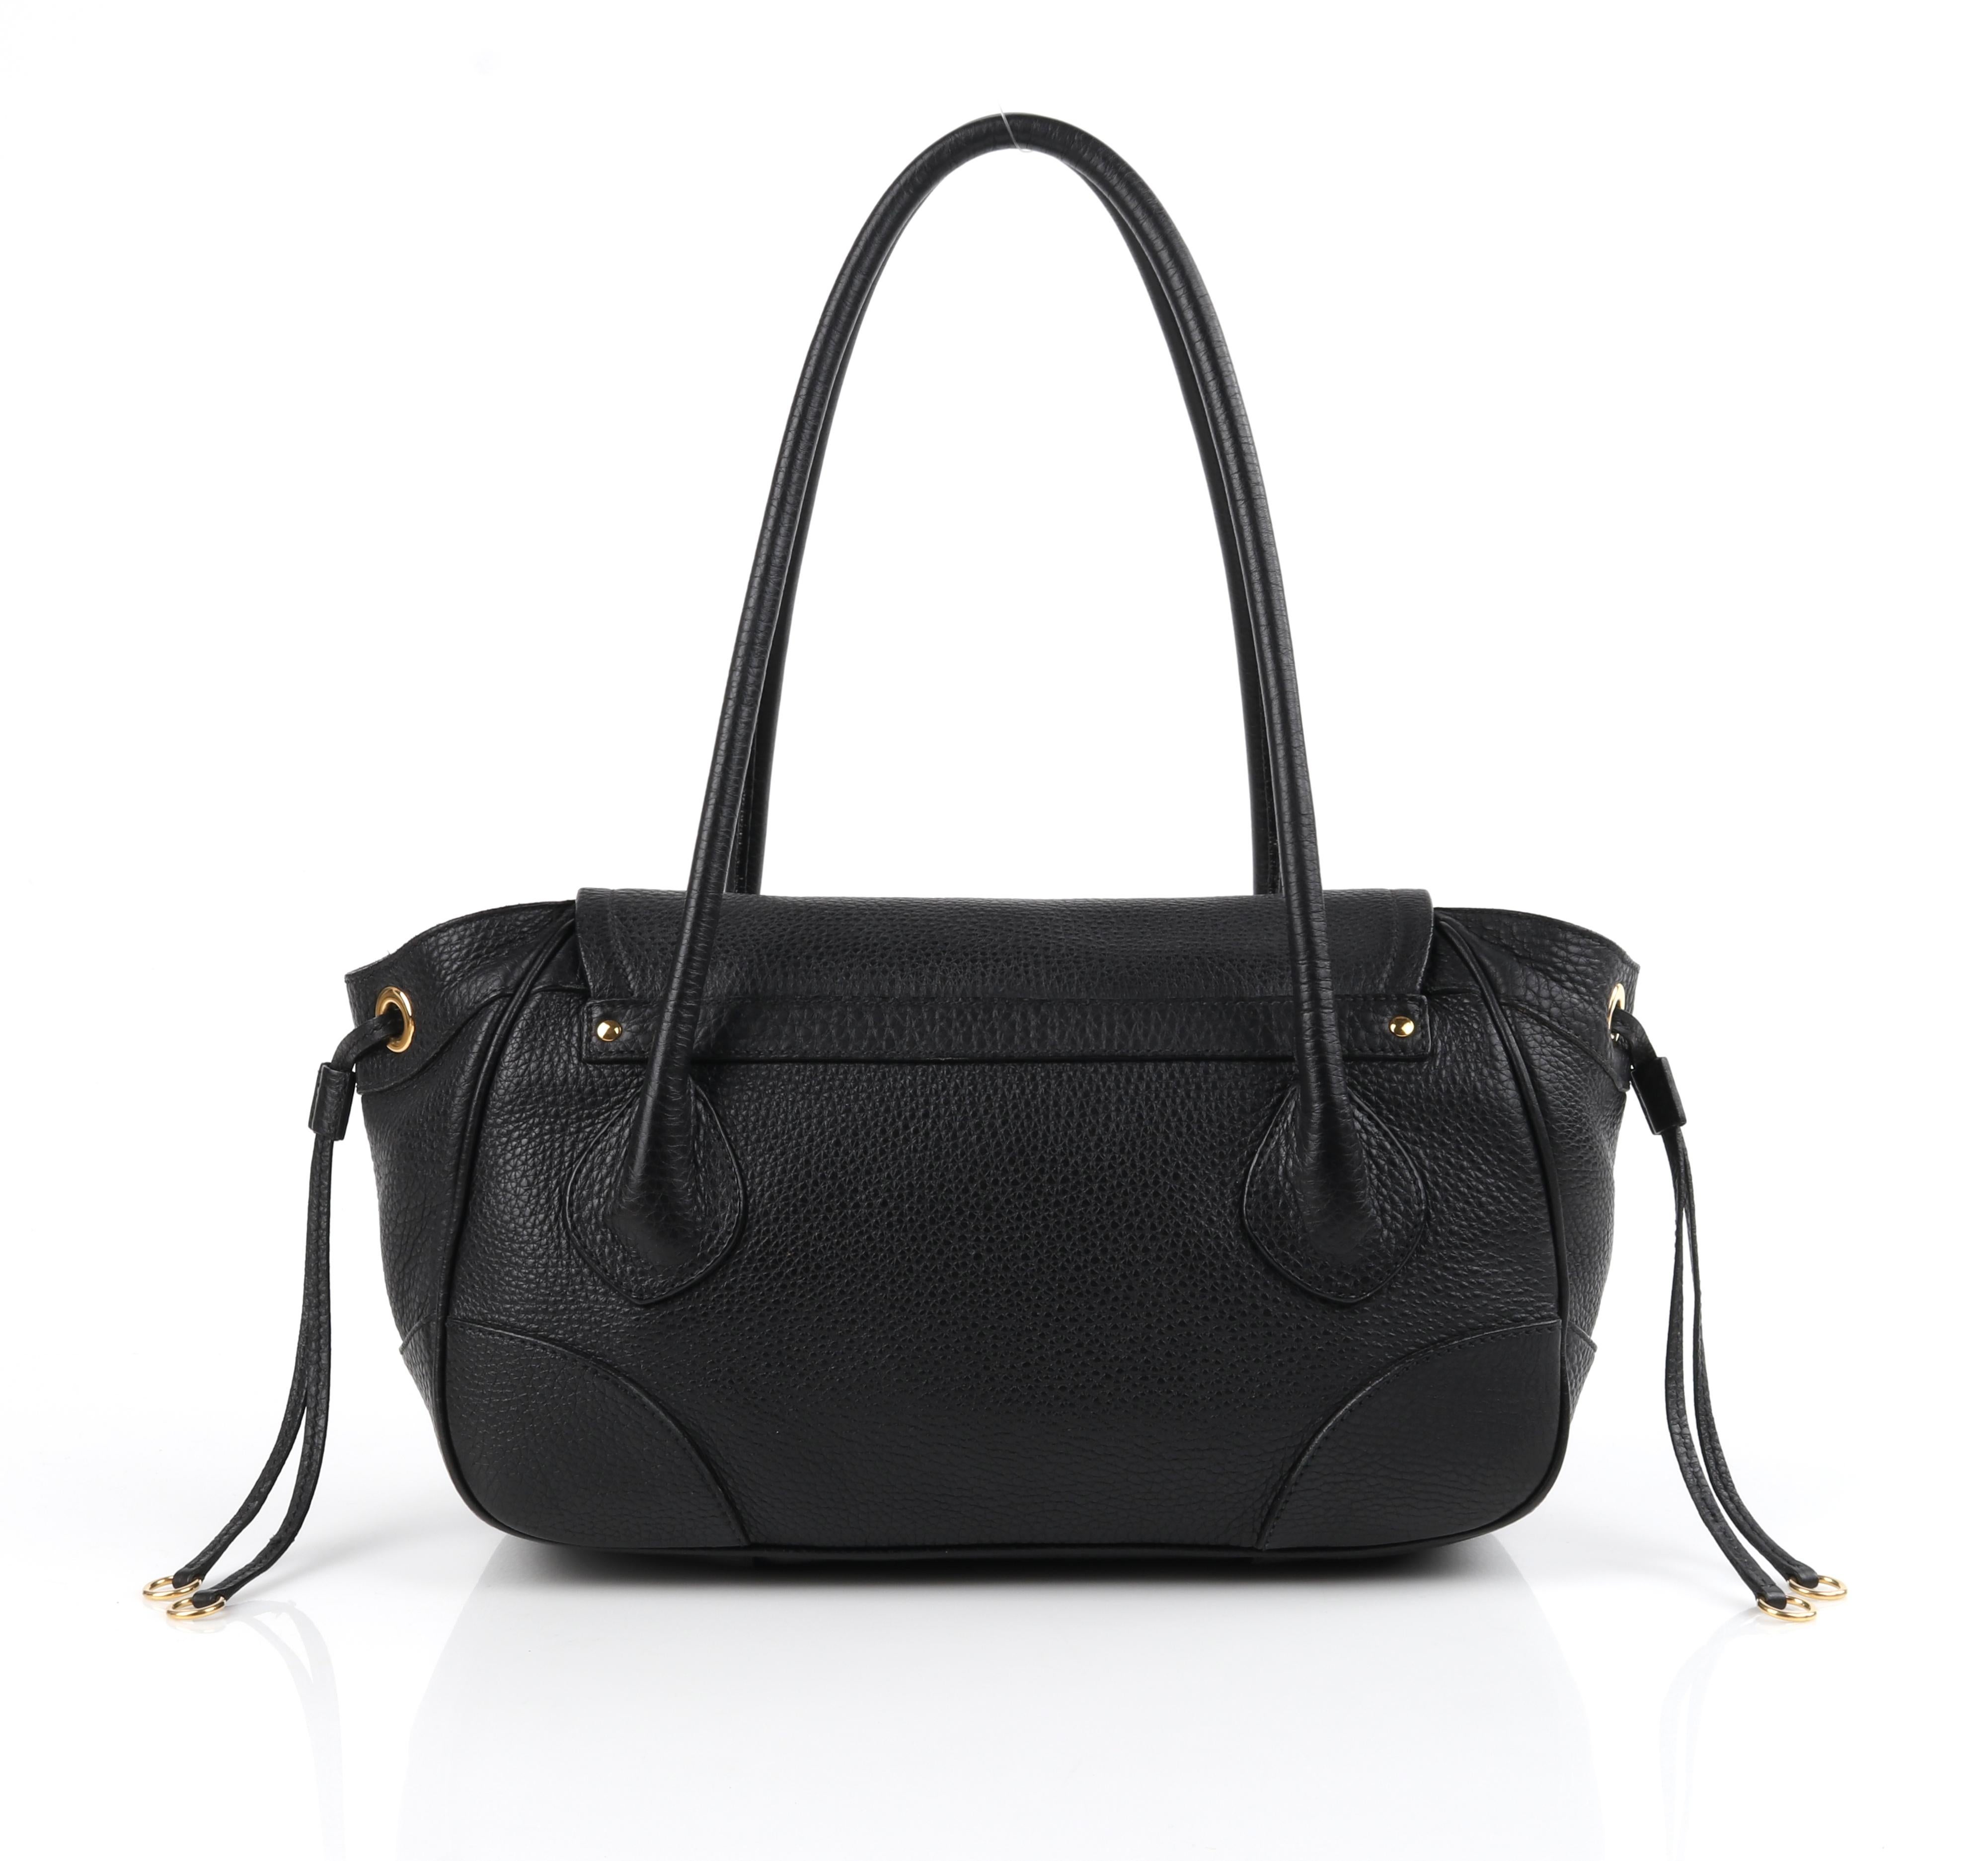 PRADA Black Cervo Leather Dual Drawstring Sound Lock Satchel Handbag 
 
Estimated Retail: $950.00
 
Brand / Manufacturer: Prada
Designer: Miuccia Prada
Style: Satchel / handbag
Color(s): Black (exterior, interior); gold (hardware)
Lined: